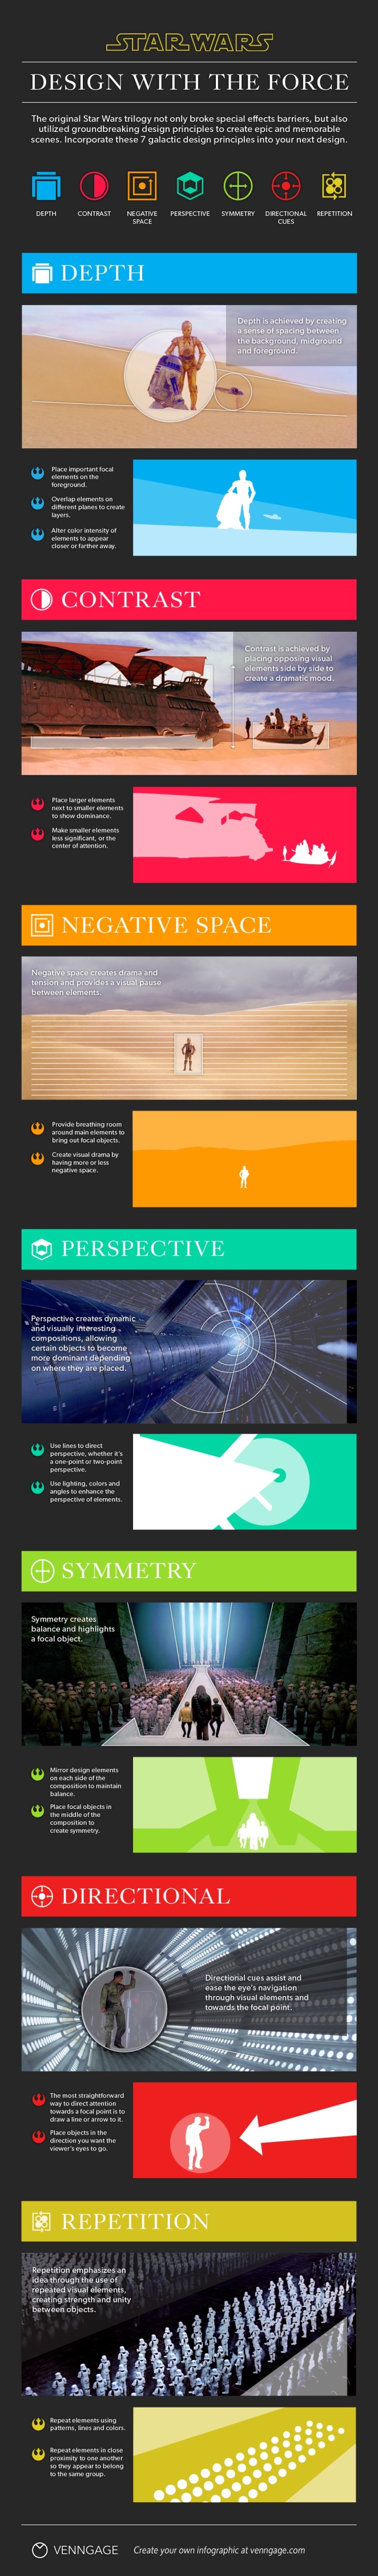 7 Design Principles from Star Wars Infographic - Graphic Design - Web Design - Kate Vega